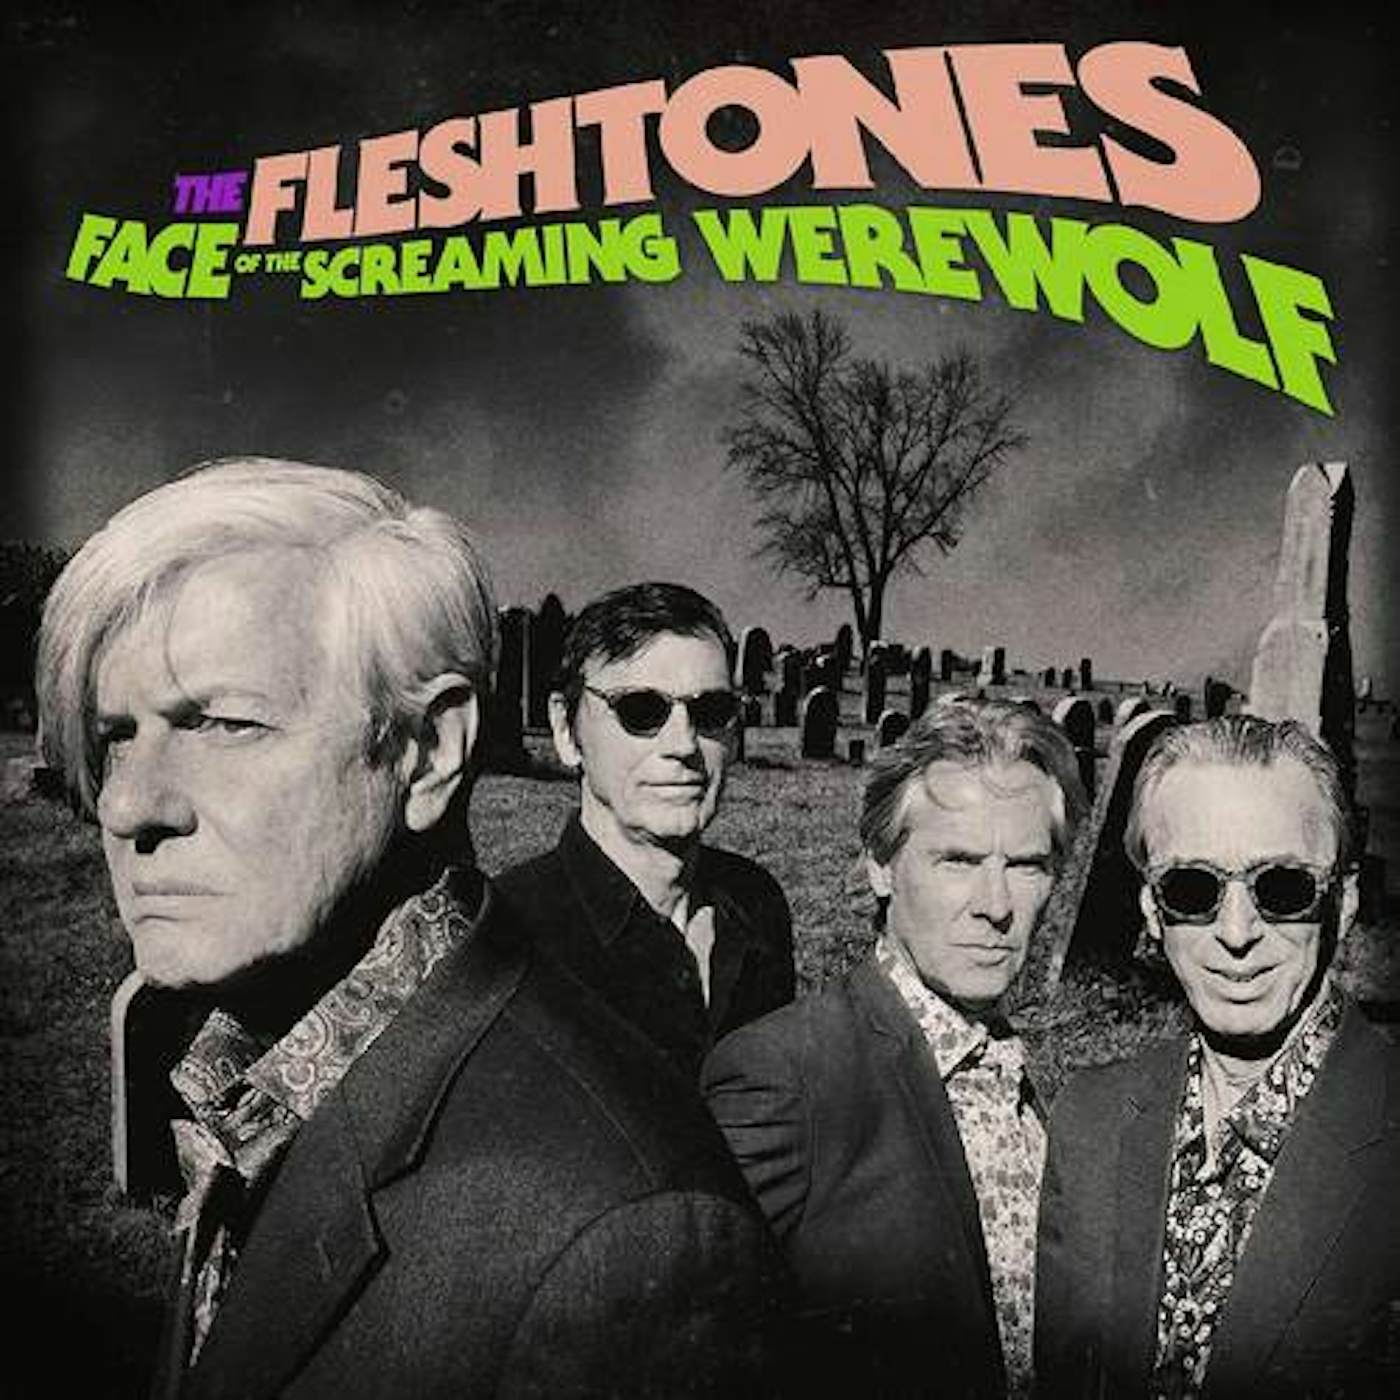 The Fleshtones Face of the Screaming Werewolf Vinyl Record